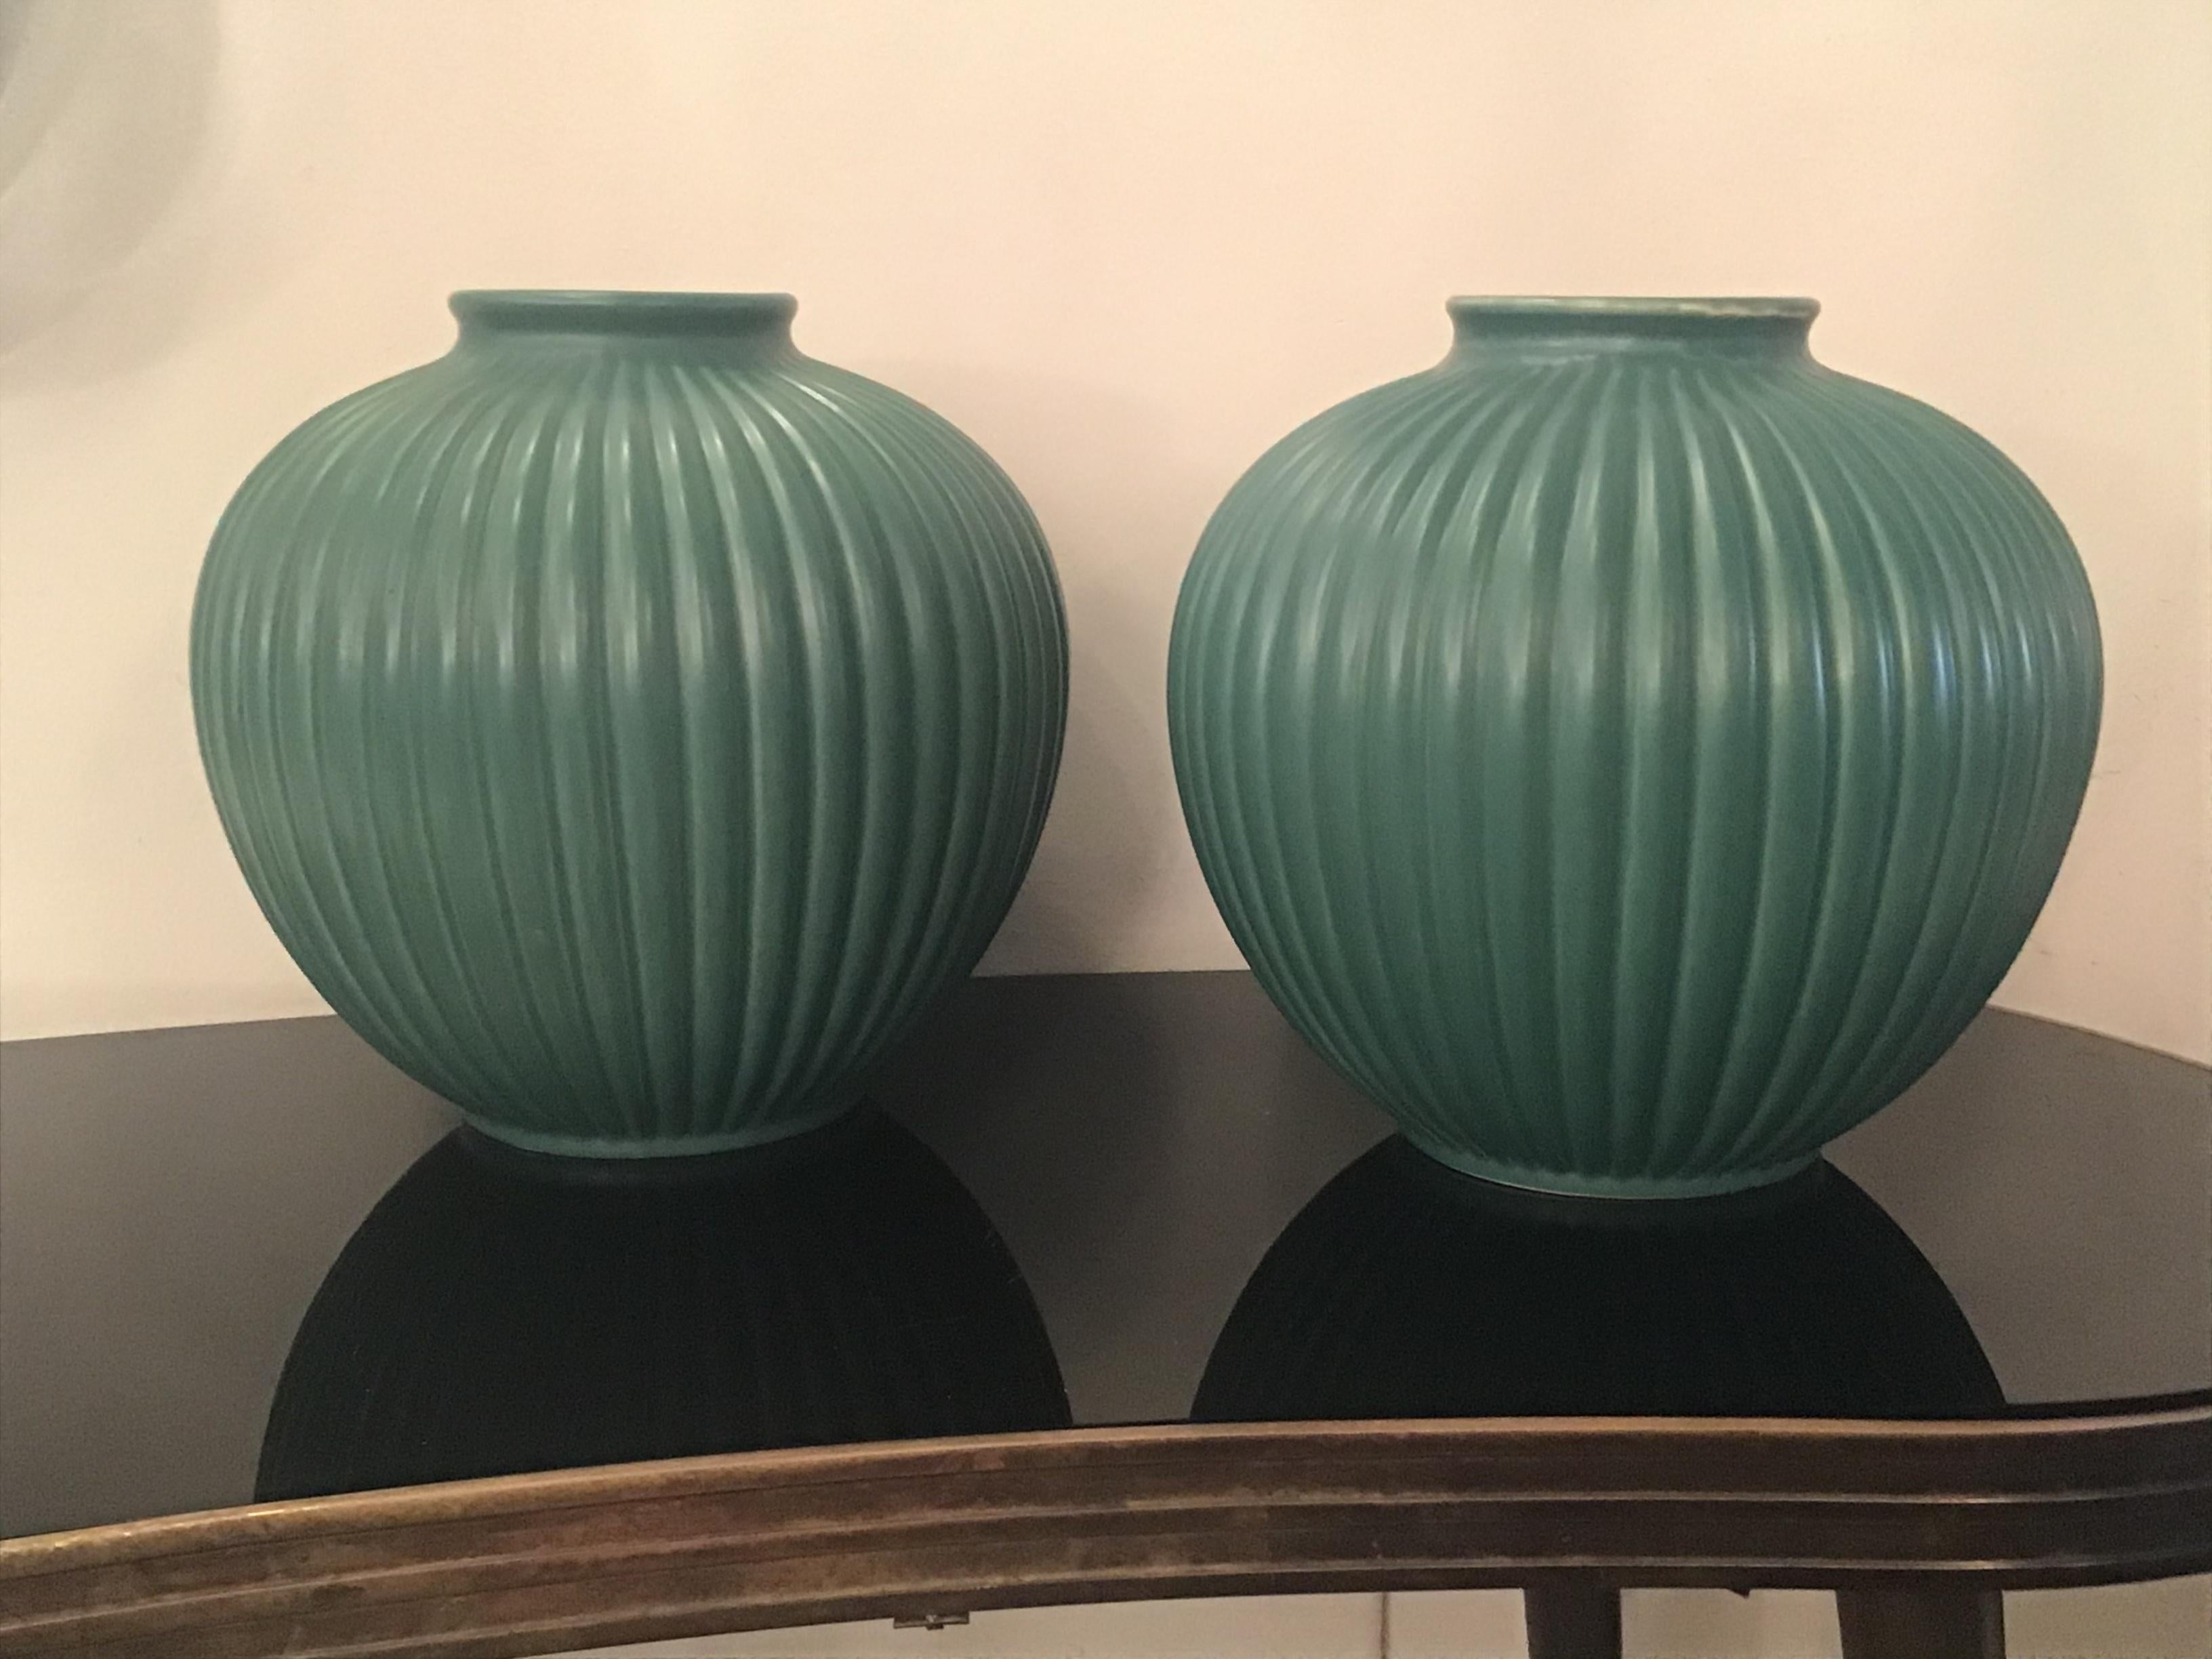 Richard Ginori Giovanni Gariboldi Pair of Vases Green Ceramic 1950 Italy For Sale 10